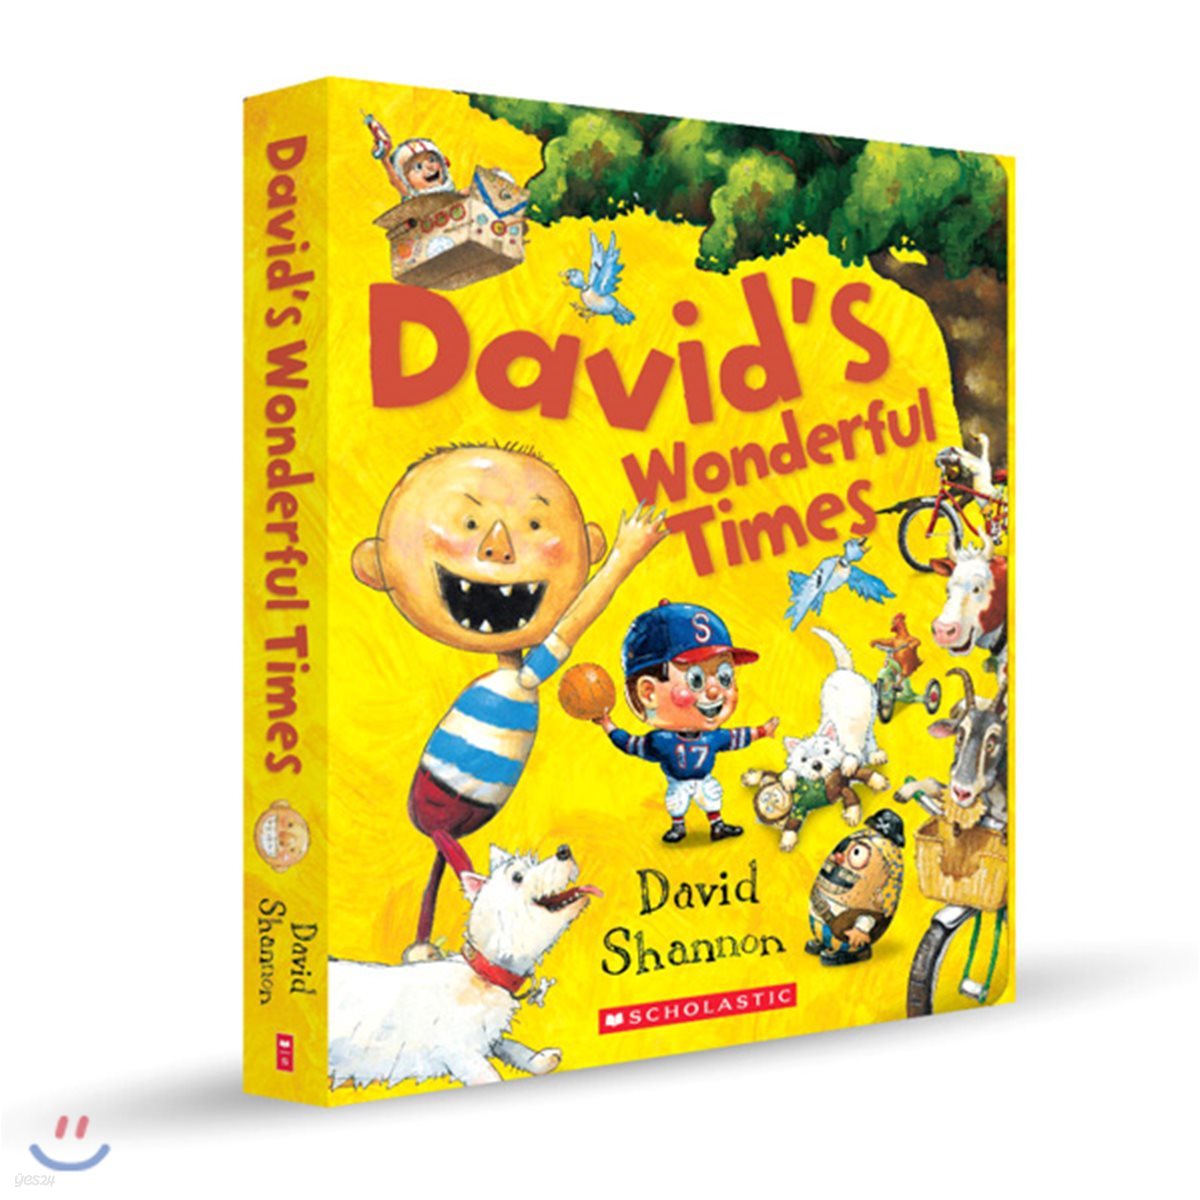 David's Wonderful Times